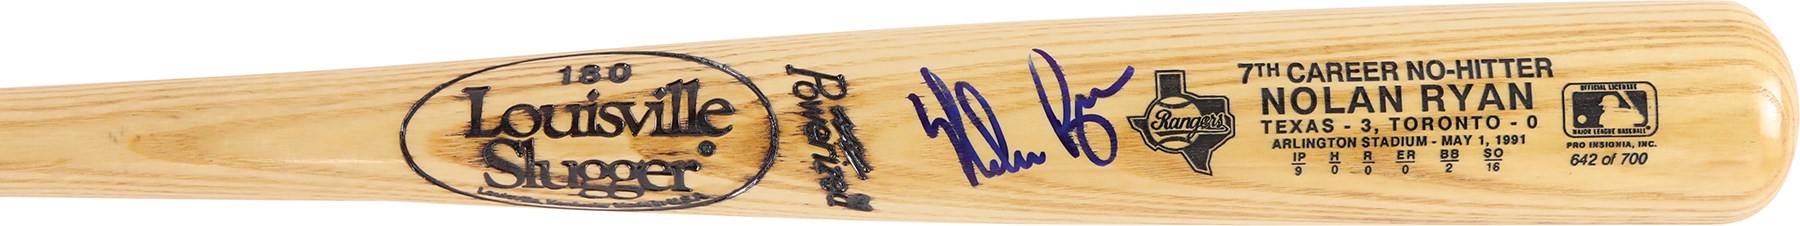 - Nolan Ryan Signed 7th Career No-Hitter Commemorative Bat